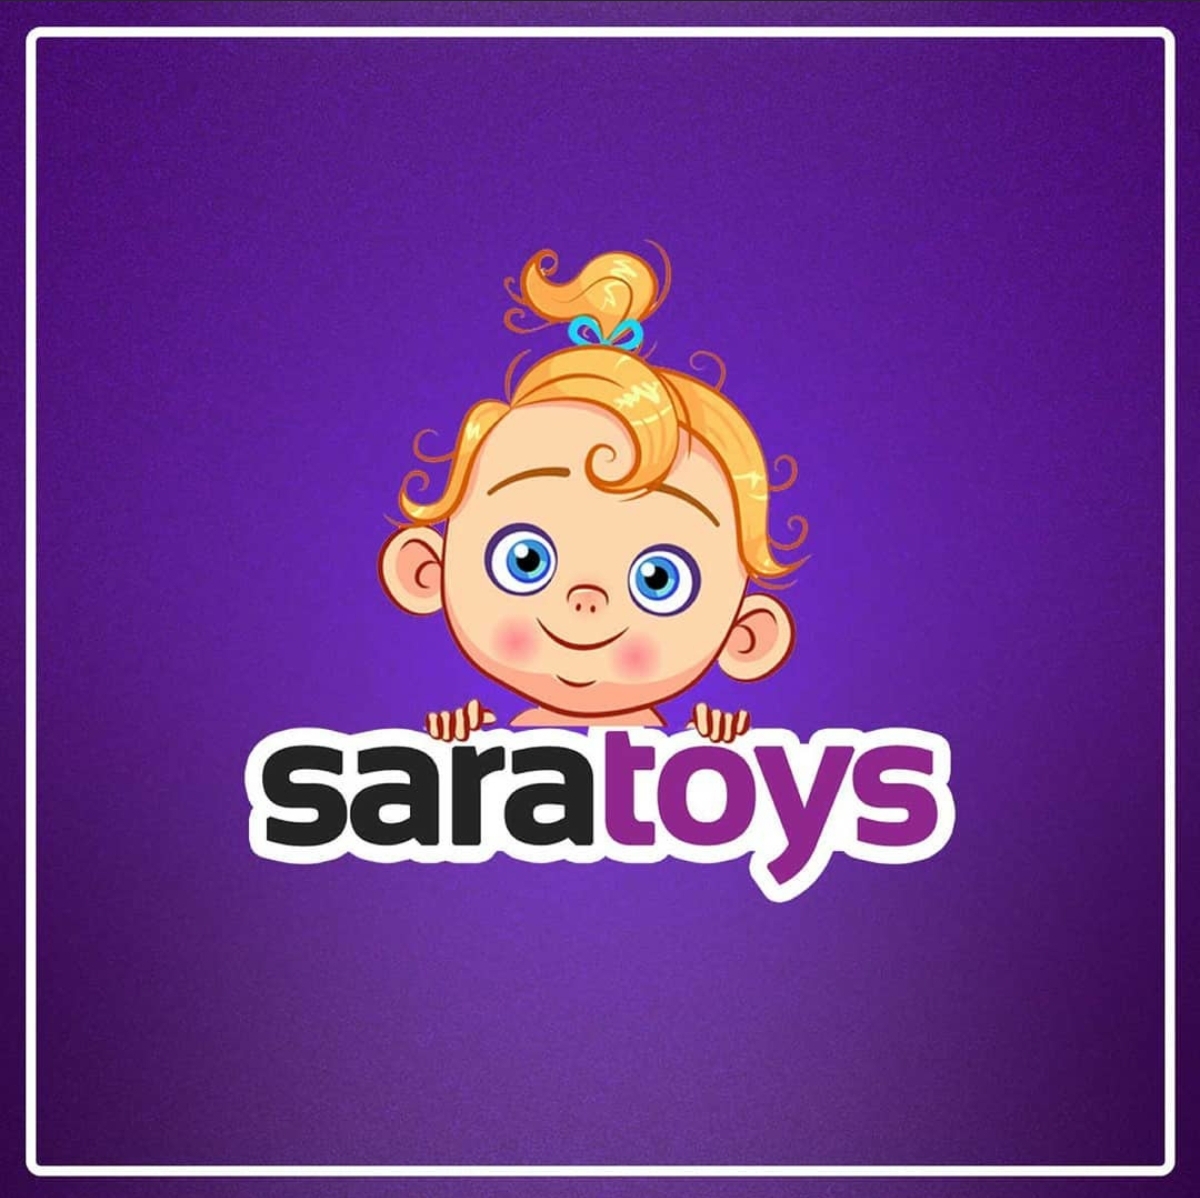 Sara toys